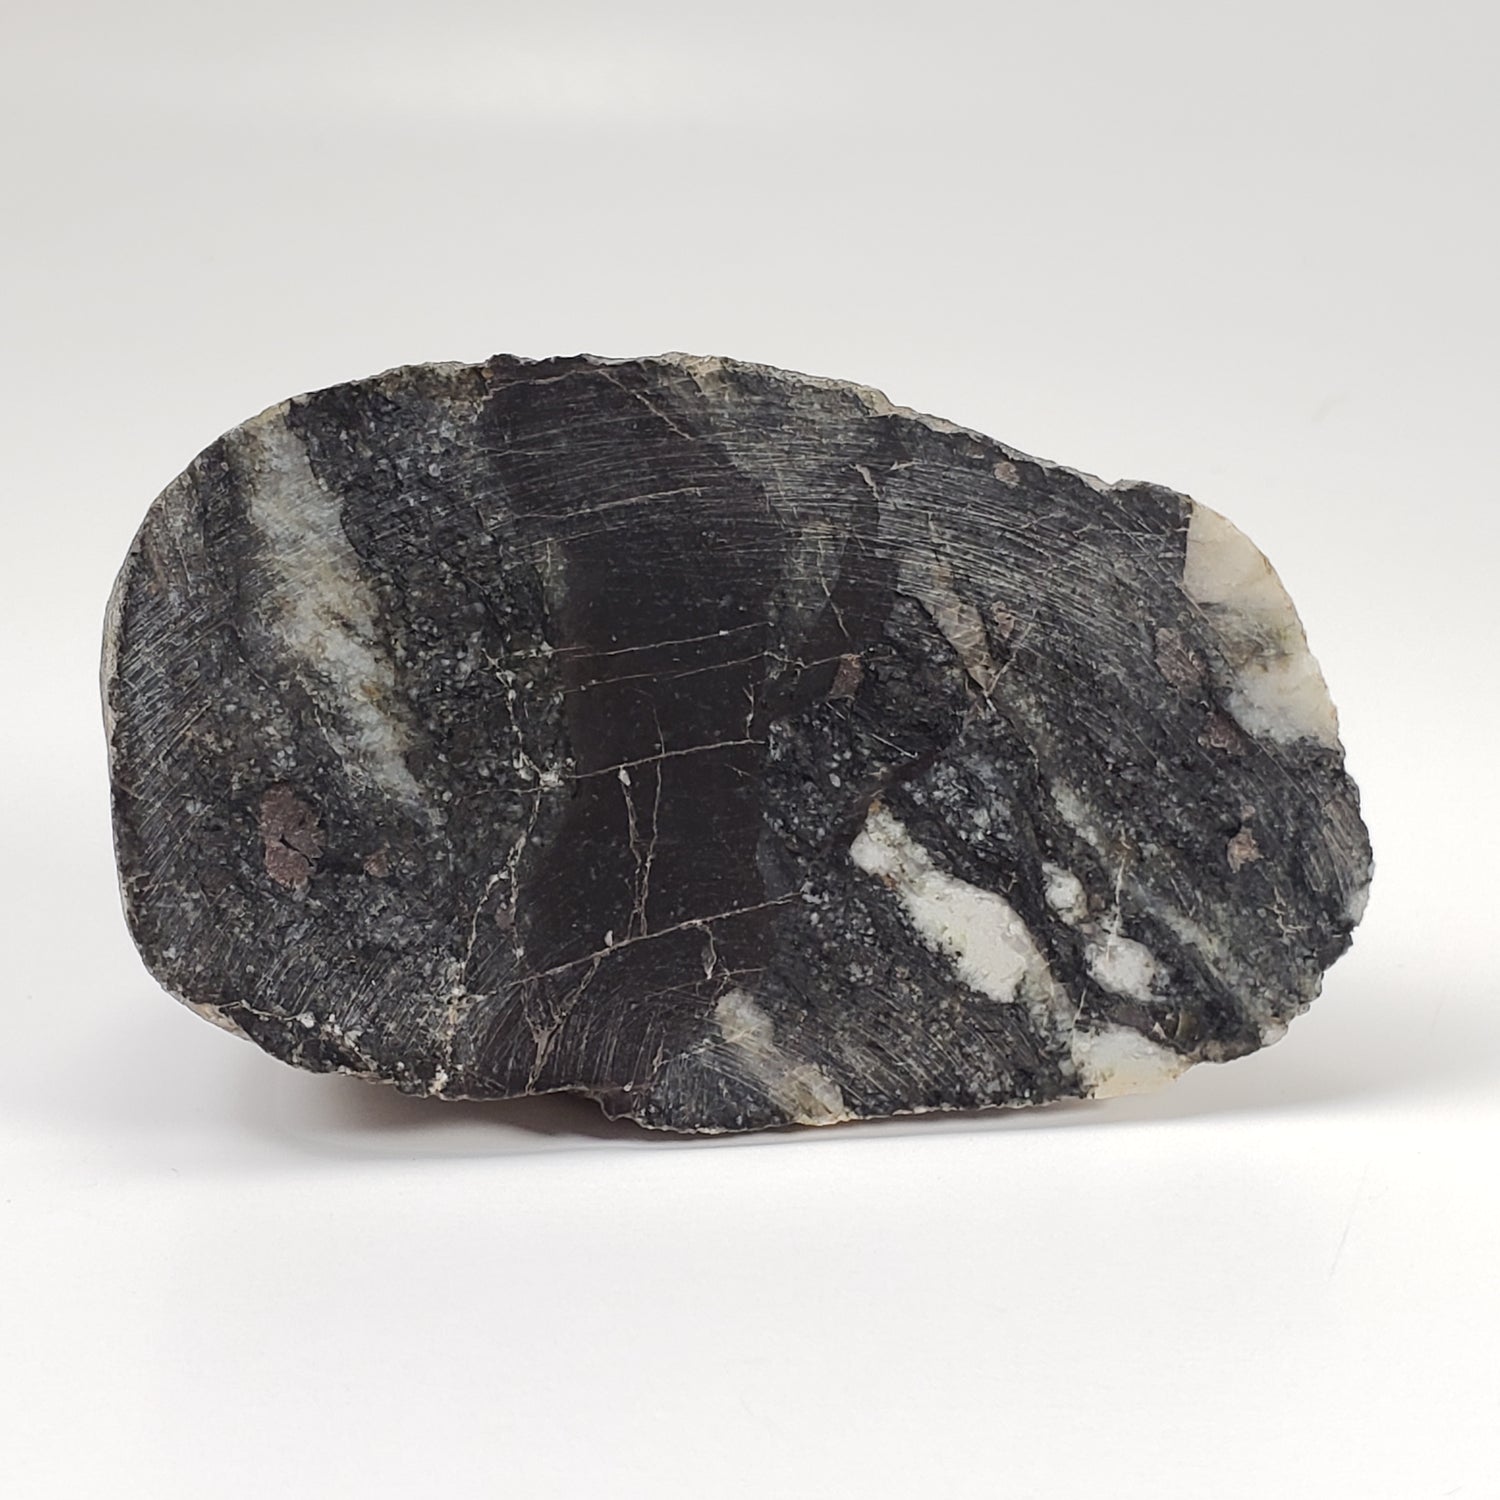 Dellenites Impact Melt Rock |  207.4 grams | HT Tagamite | Dellen Crater, Sweden